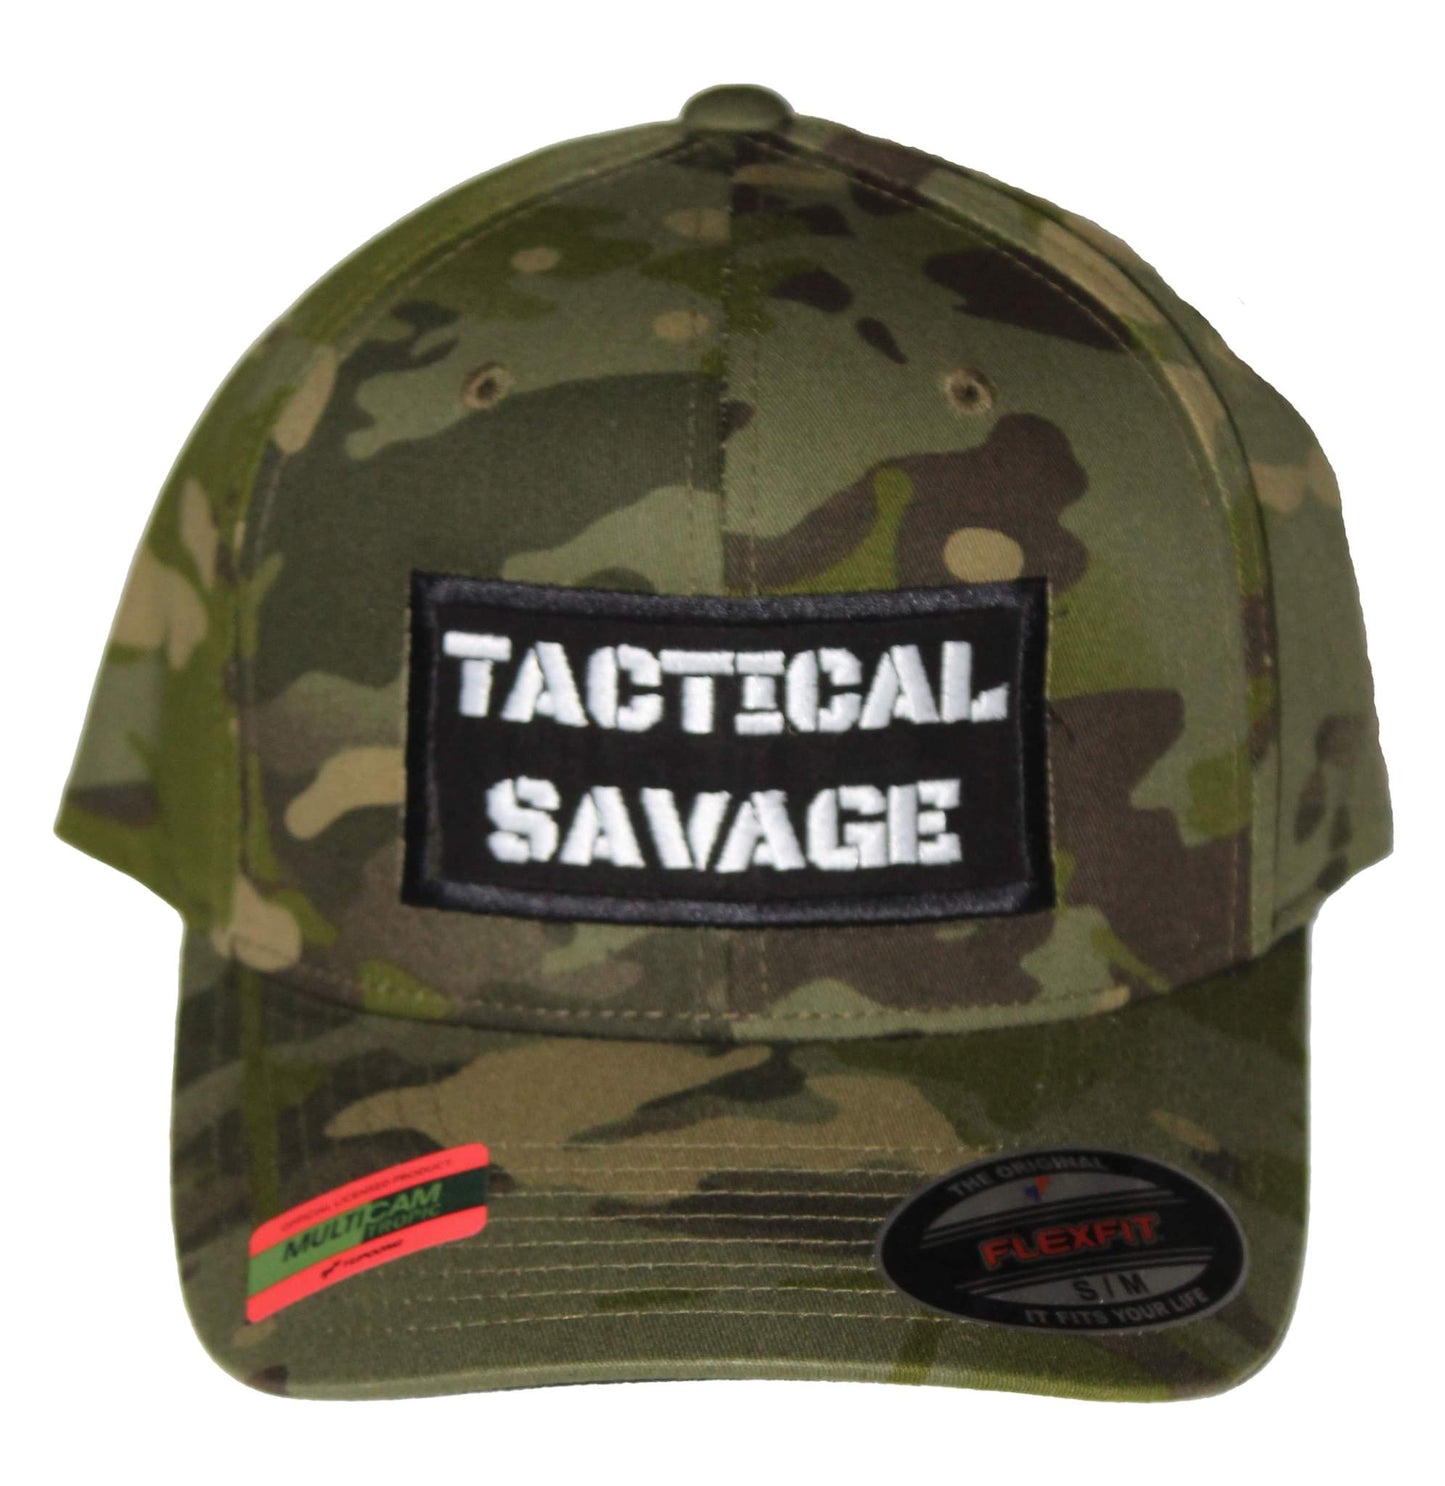 Flex fit Tactical Savage hats